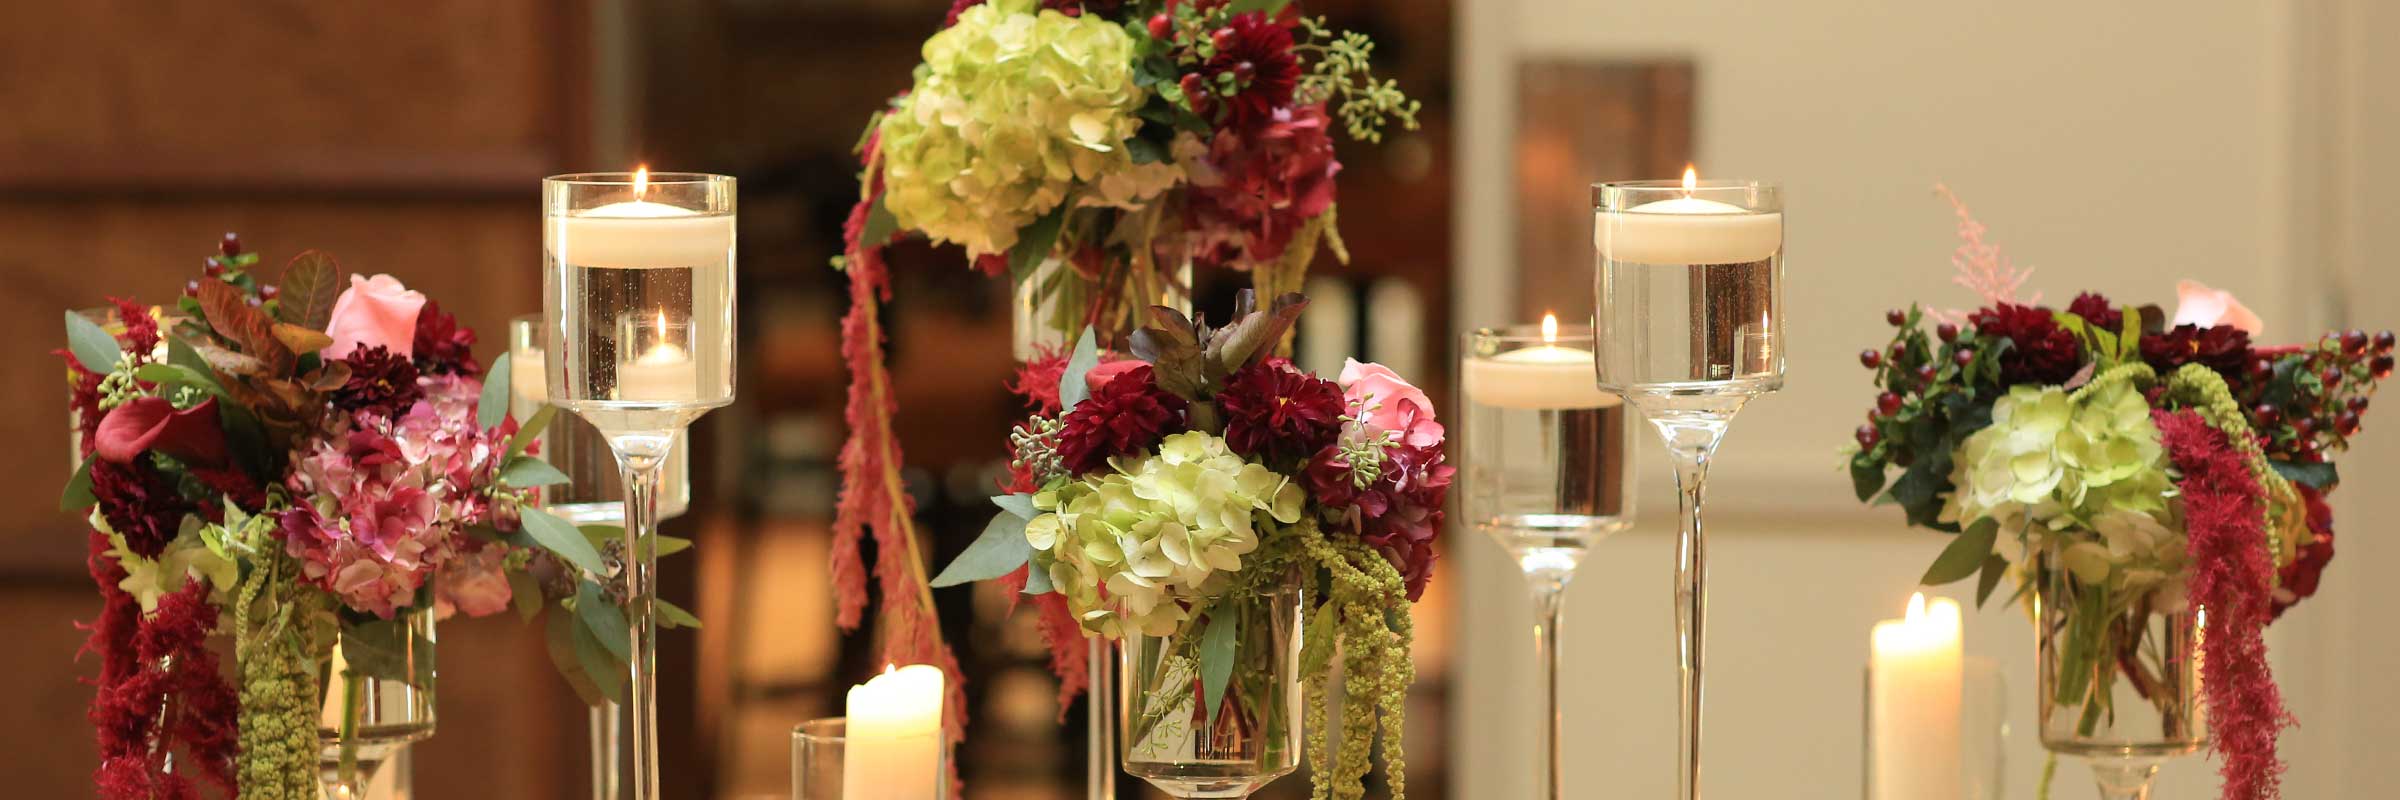 Wedding Fresh Flowers Floral Design